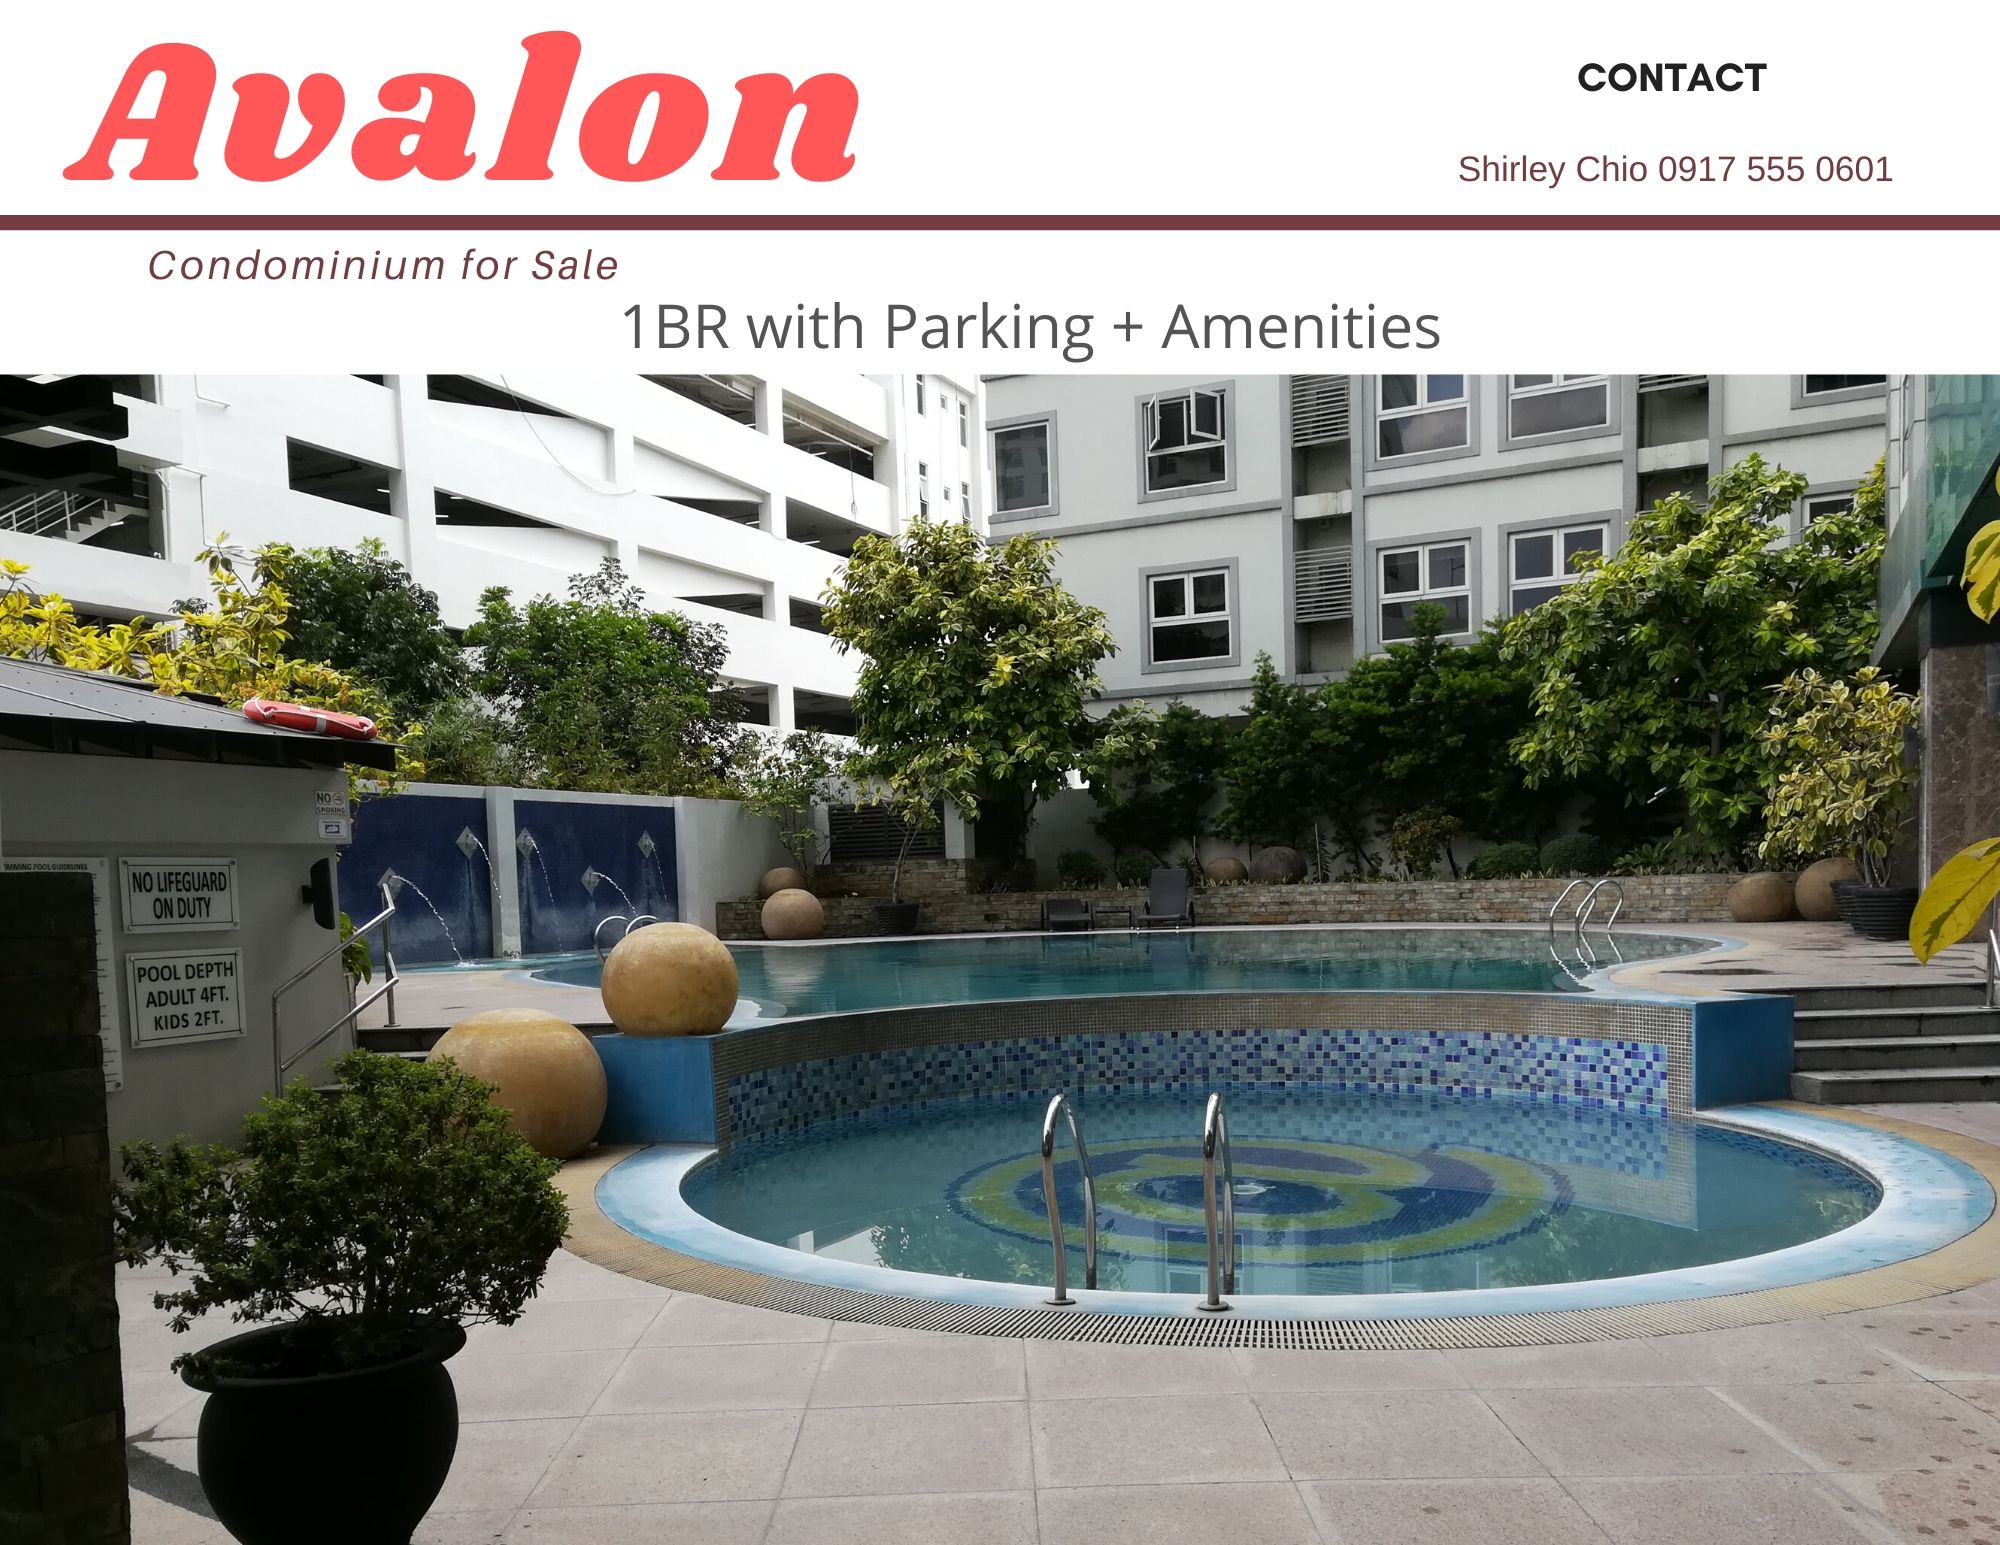 1BR with Parking Avalon Condominium for Sale in Cebu Philippines